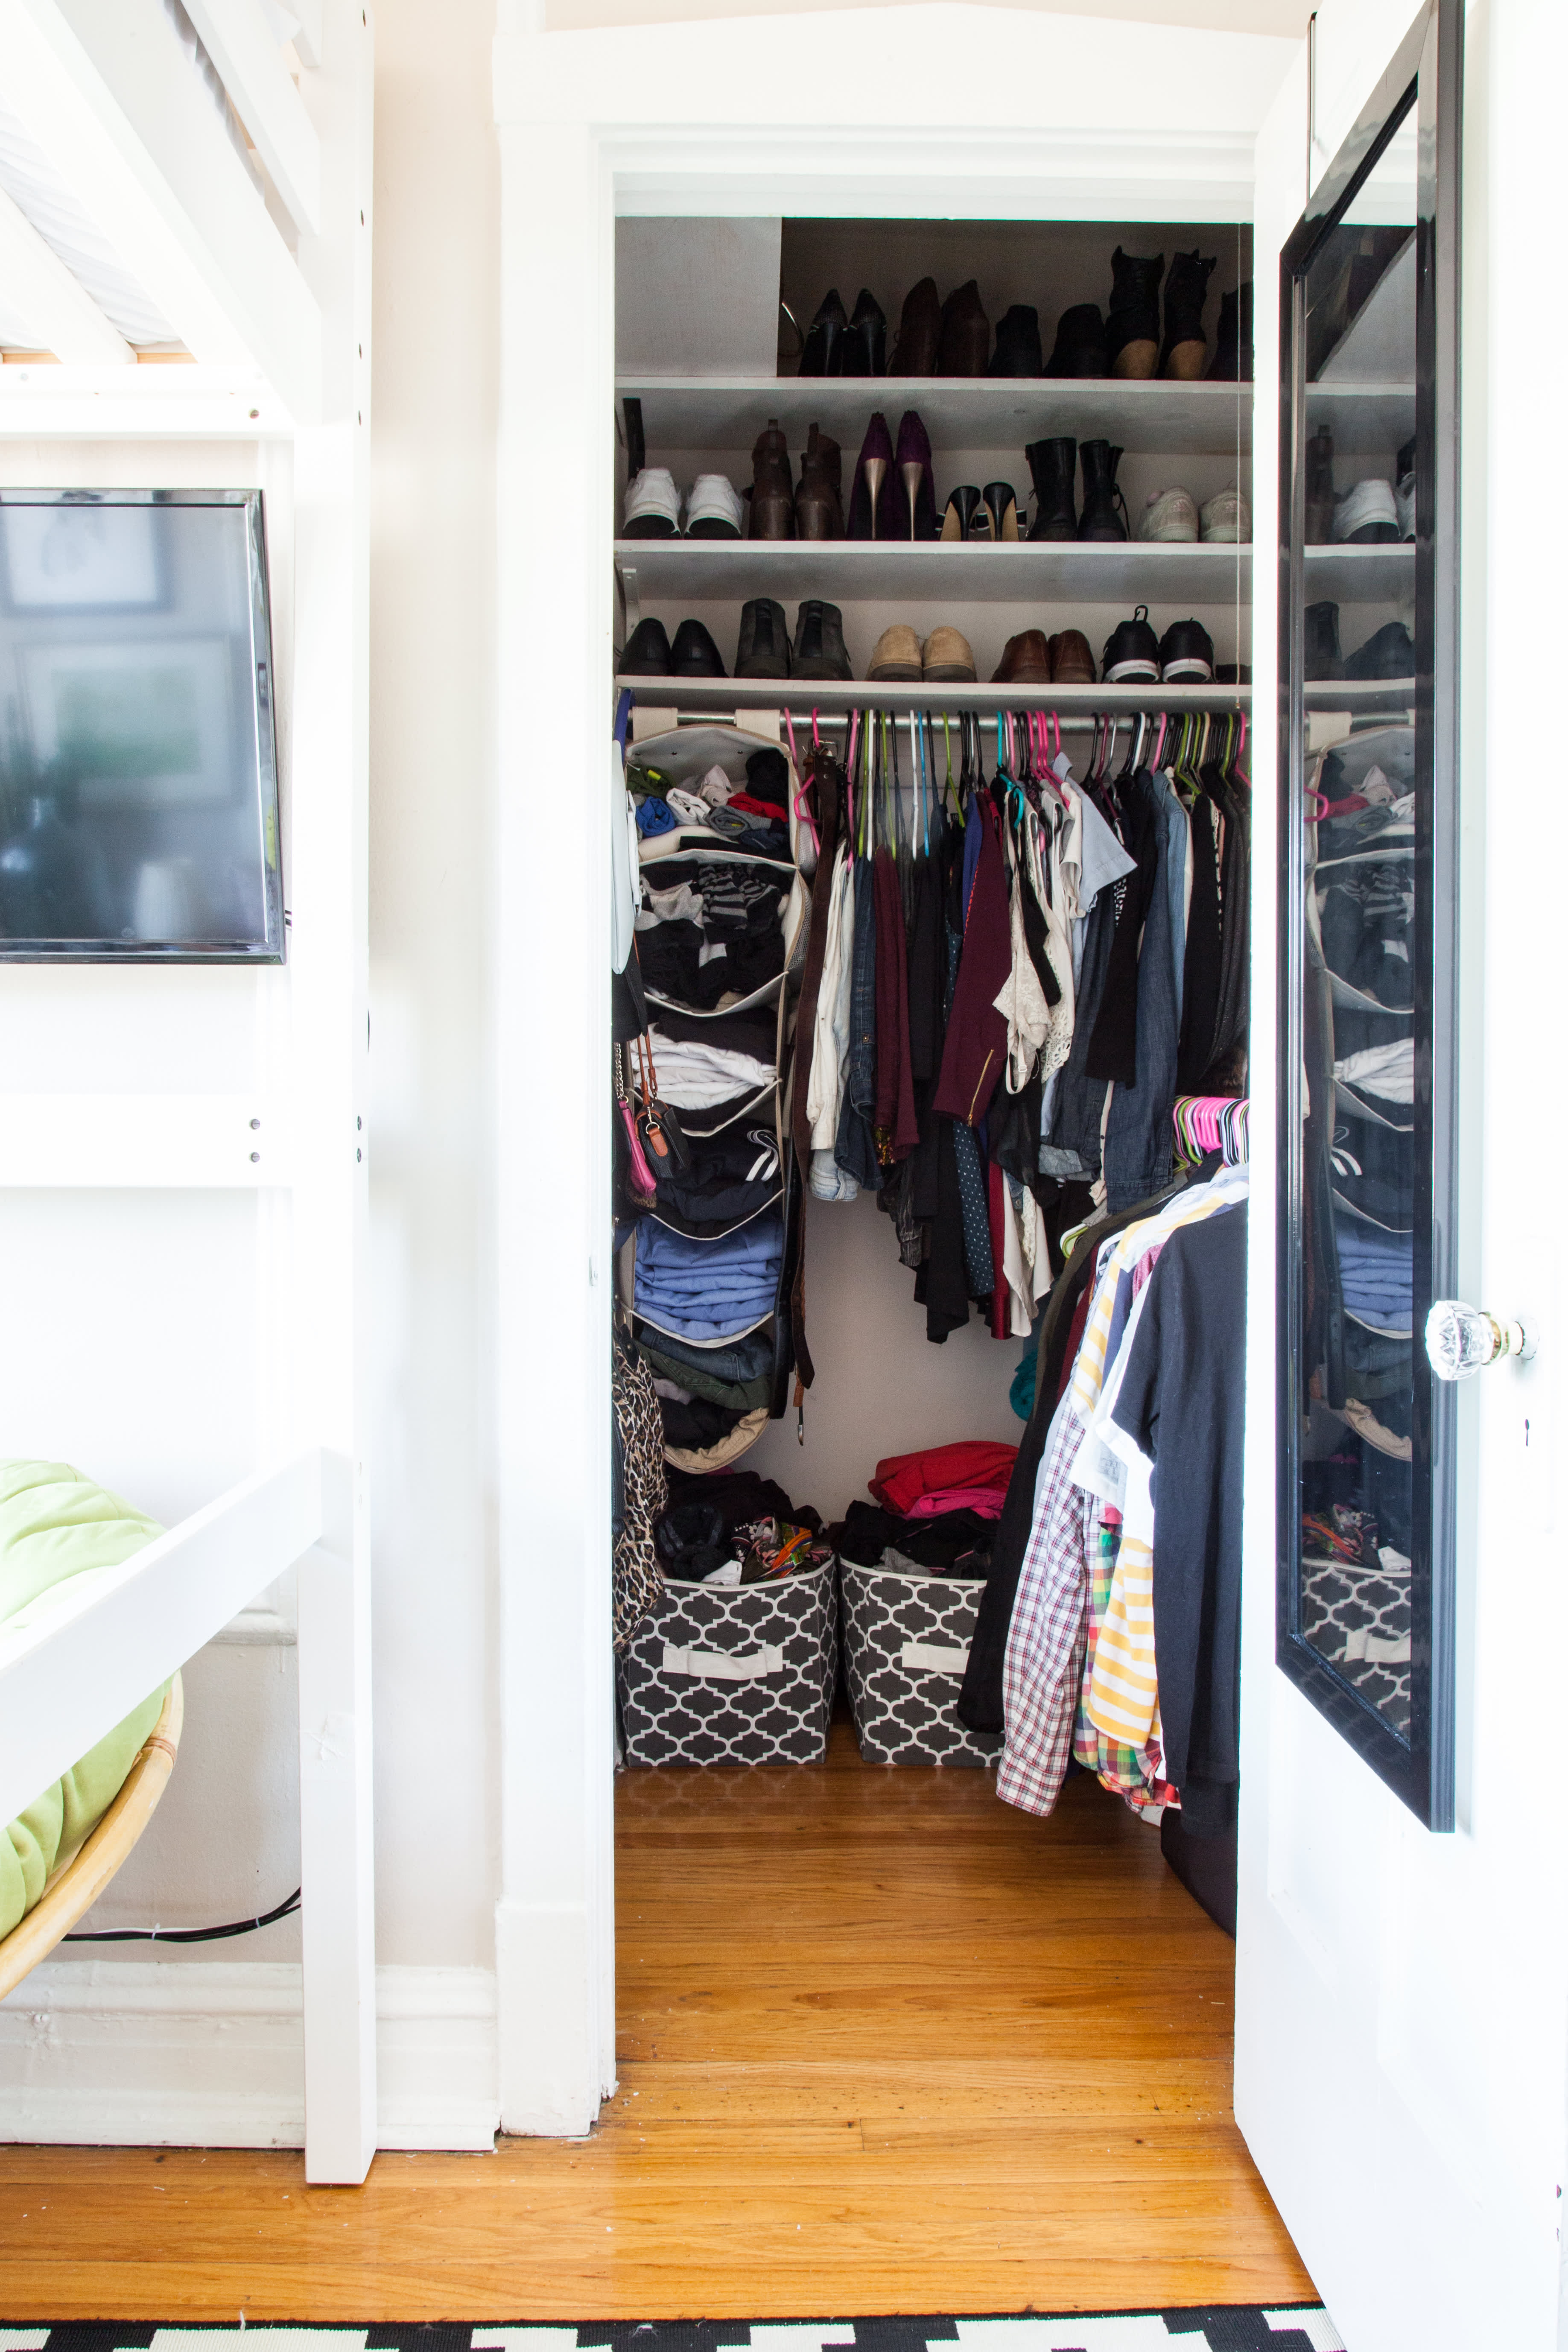 Small Closet Organization and Storage Ideas, How to Organize a Small Closet